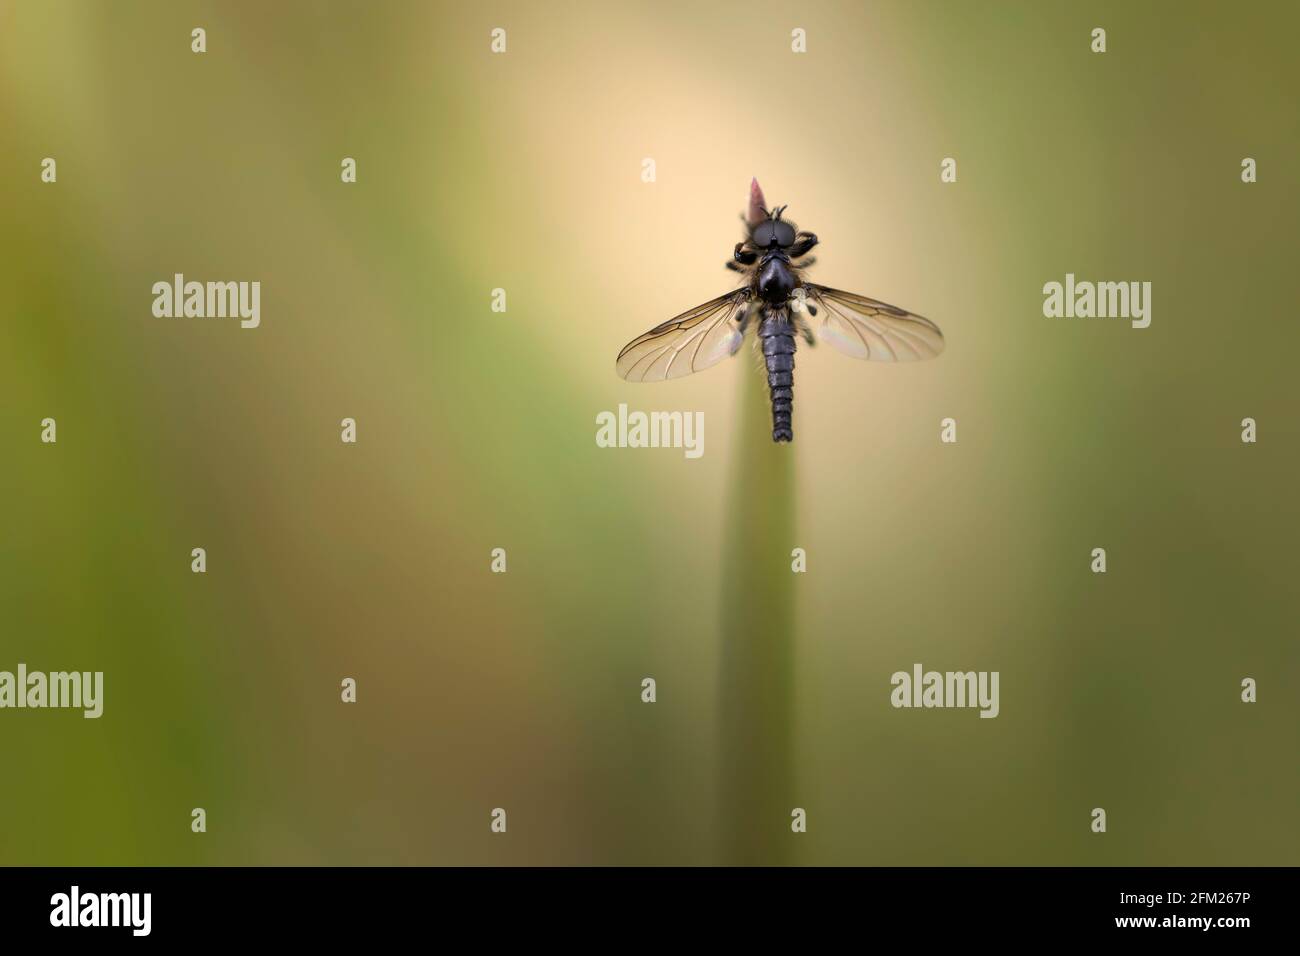 March fly or lovebug Bibio lanigerus perched on grass Stock Photo